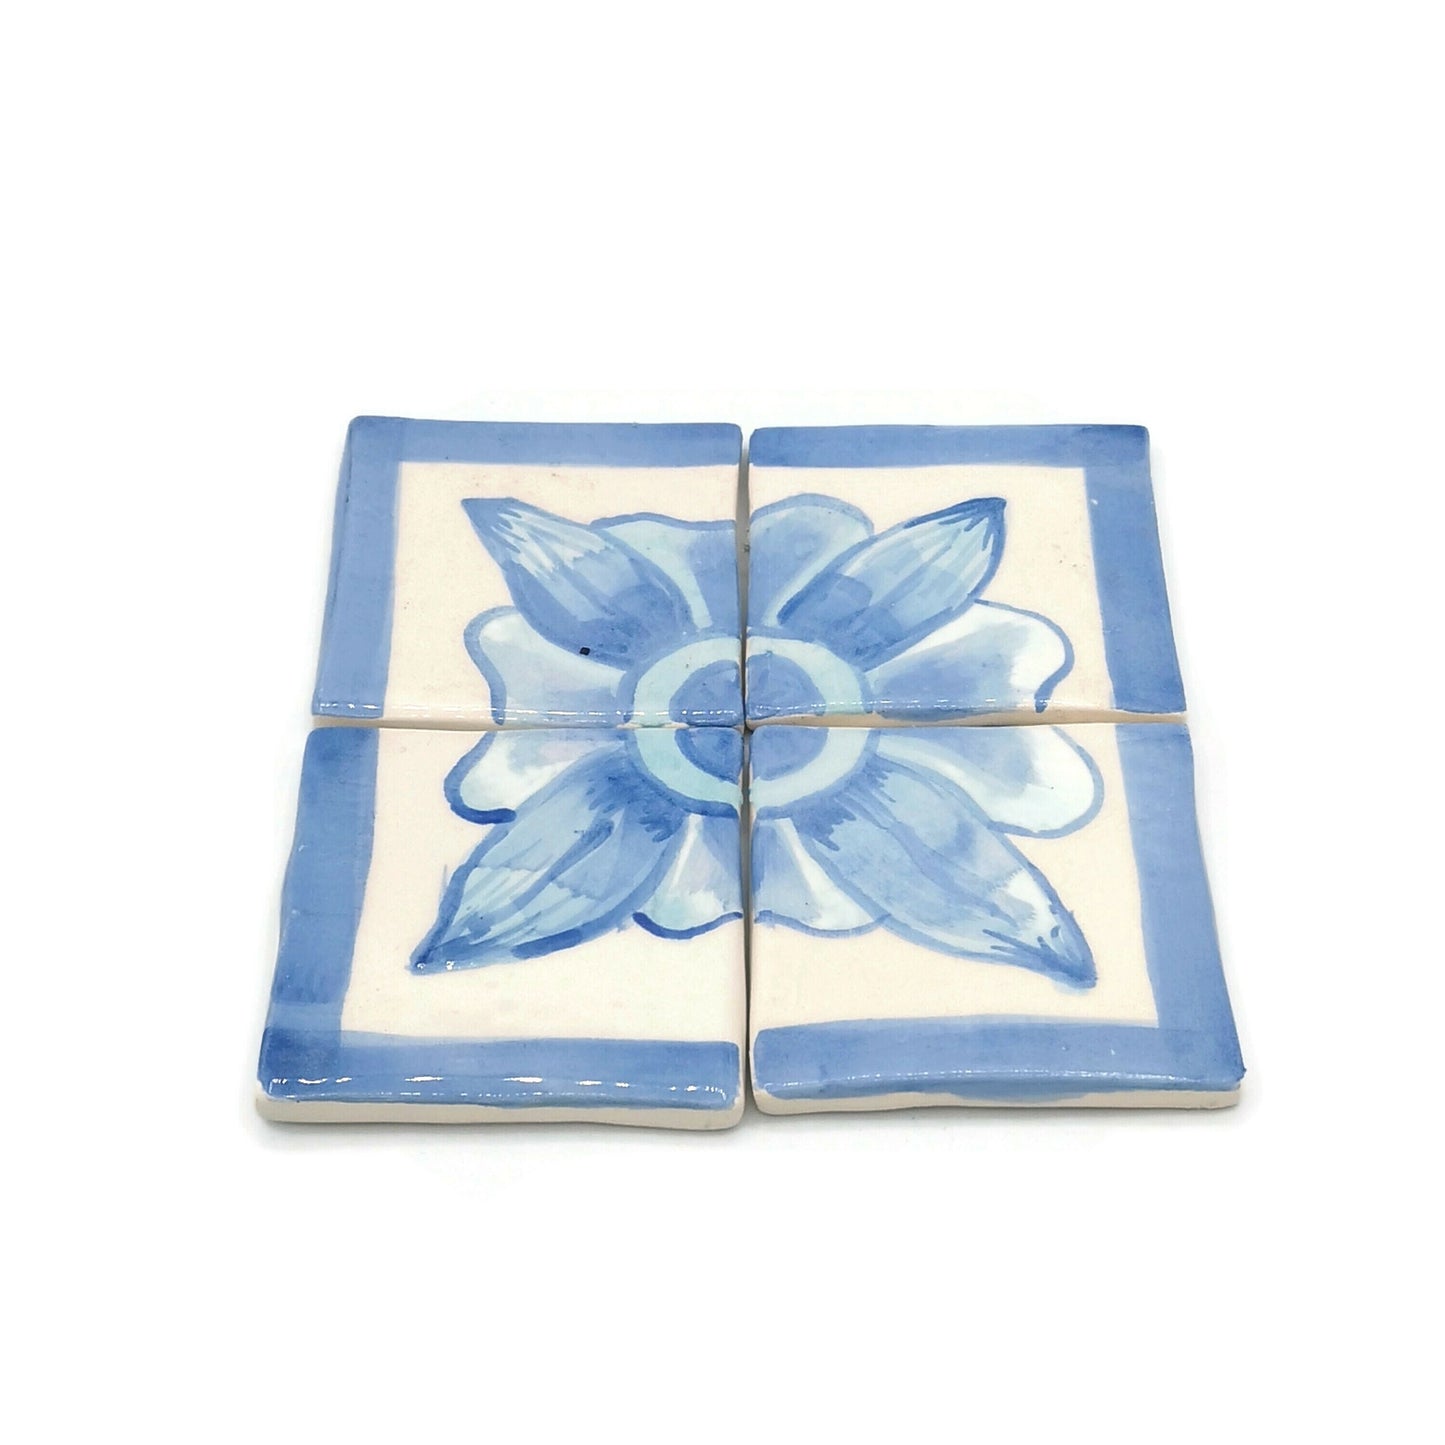 15cm/5.9in Handmade Ceramic Blue And White Tile Panel With Hand Painted Floral Motif, Square Mosaic Panel Kitchen Backsplash Portuguese Tile - Ceramica Ana Rafael